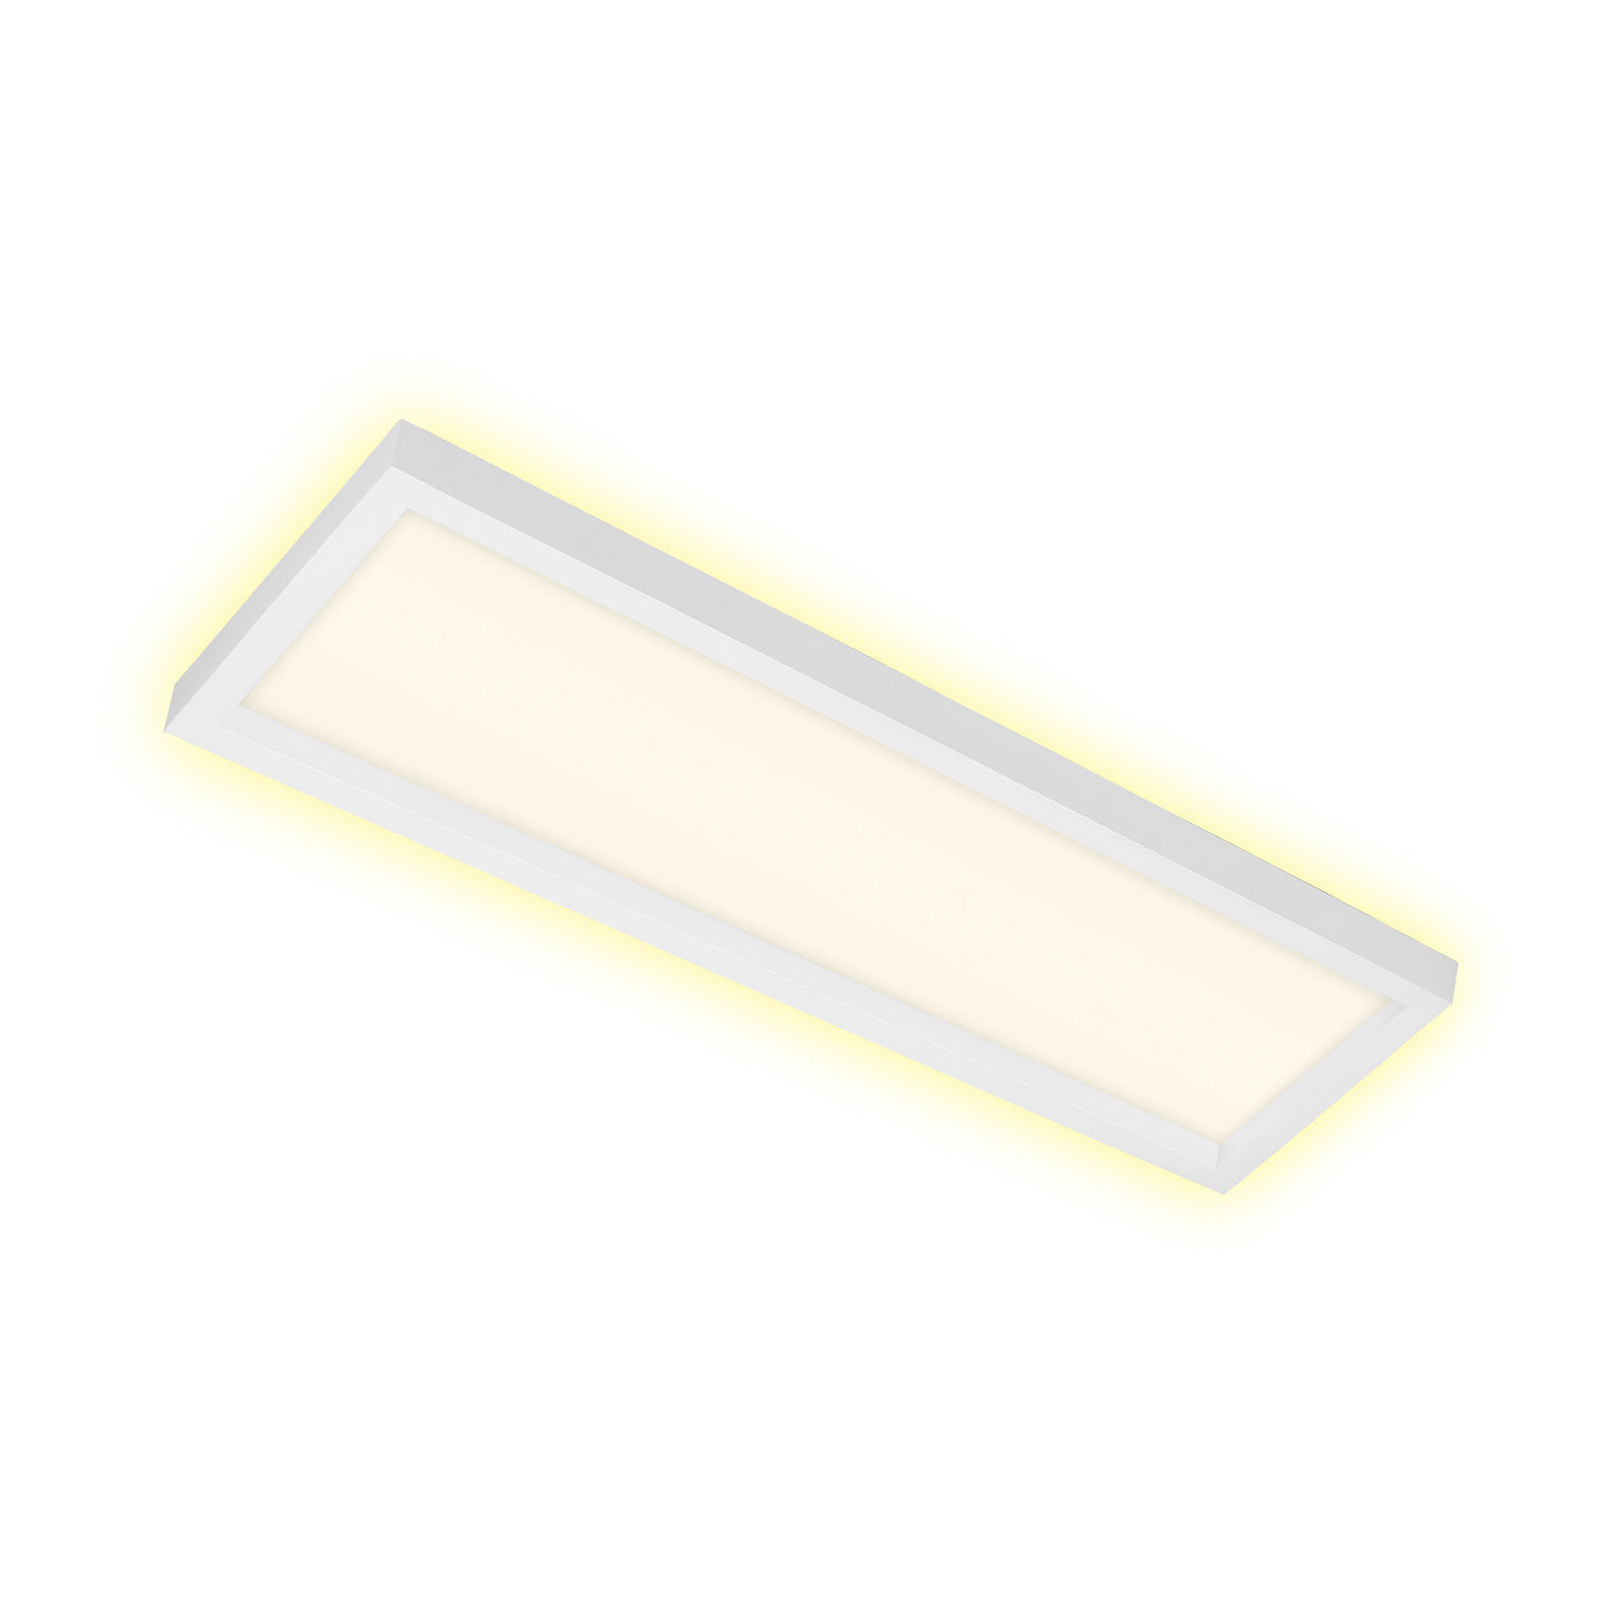 Plafonnier LED 7365, 58 x 20 cm, blanc